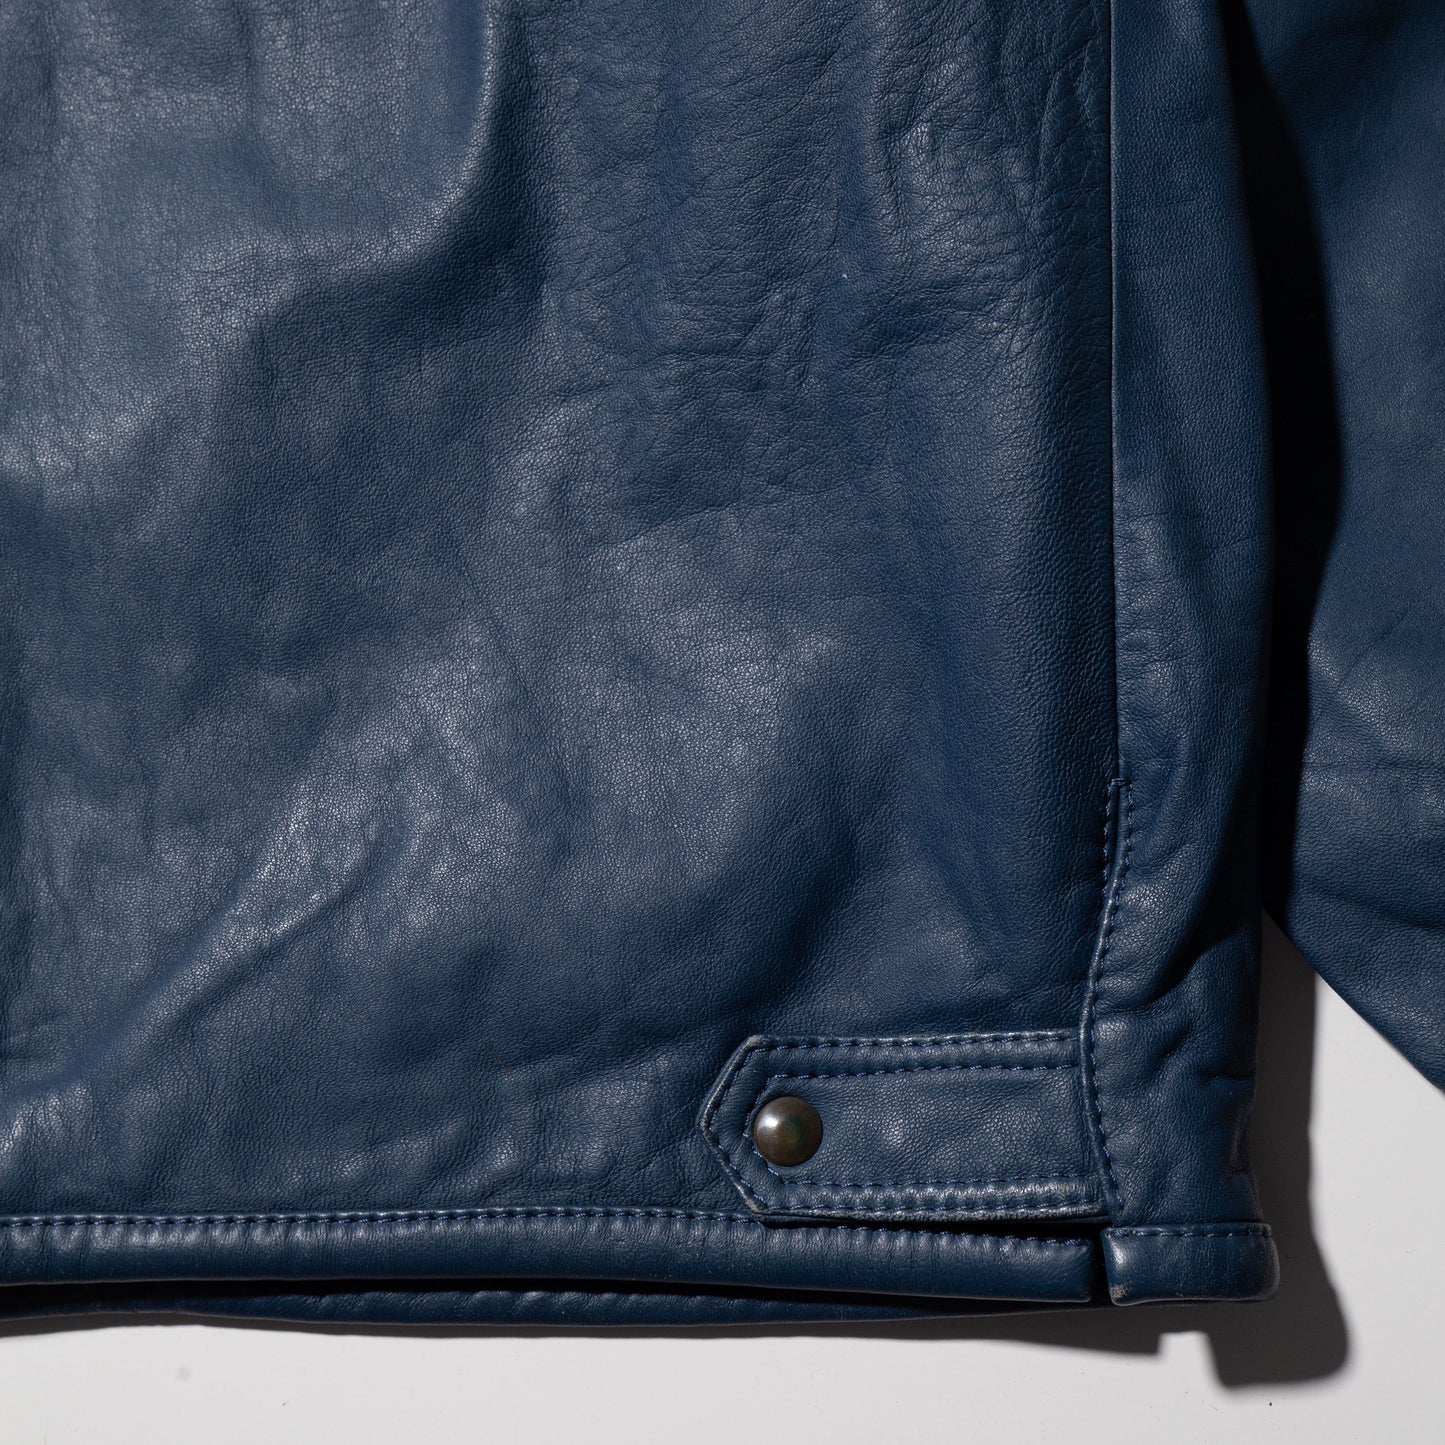 vintage euro single leather jacket , detachable sleeve